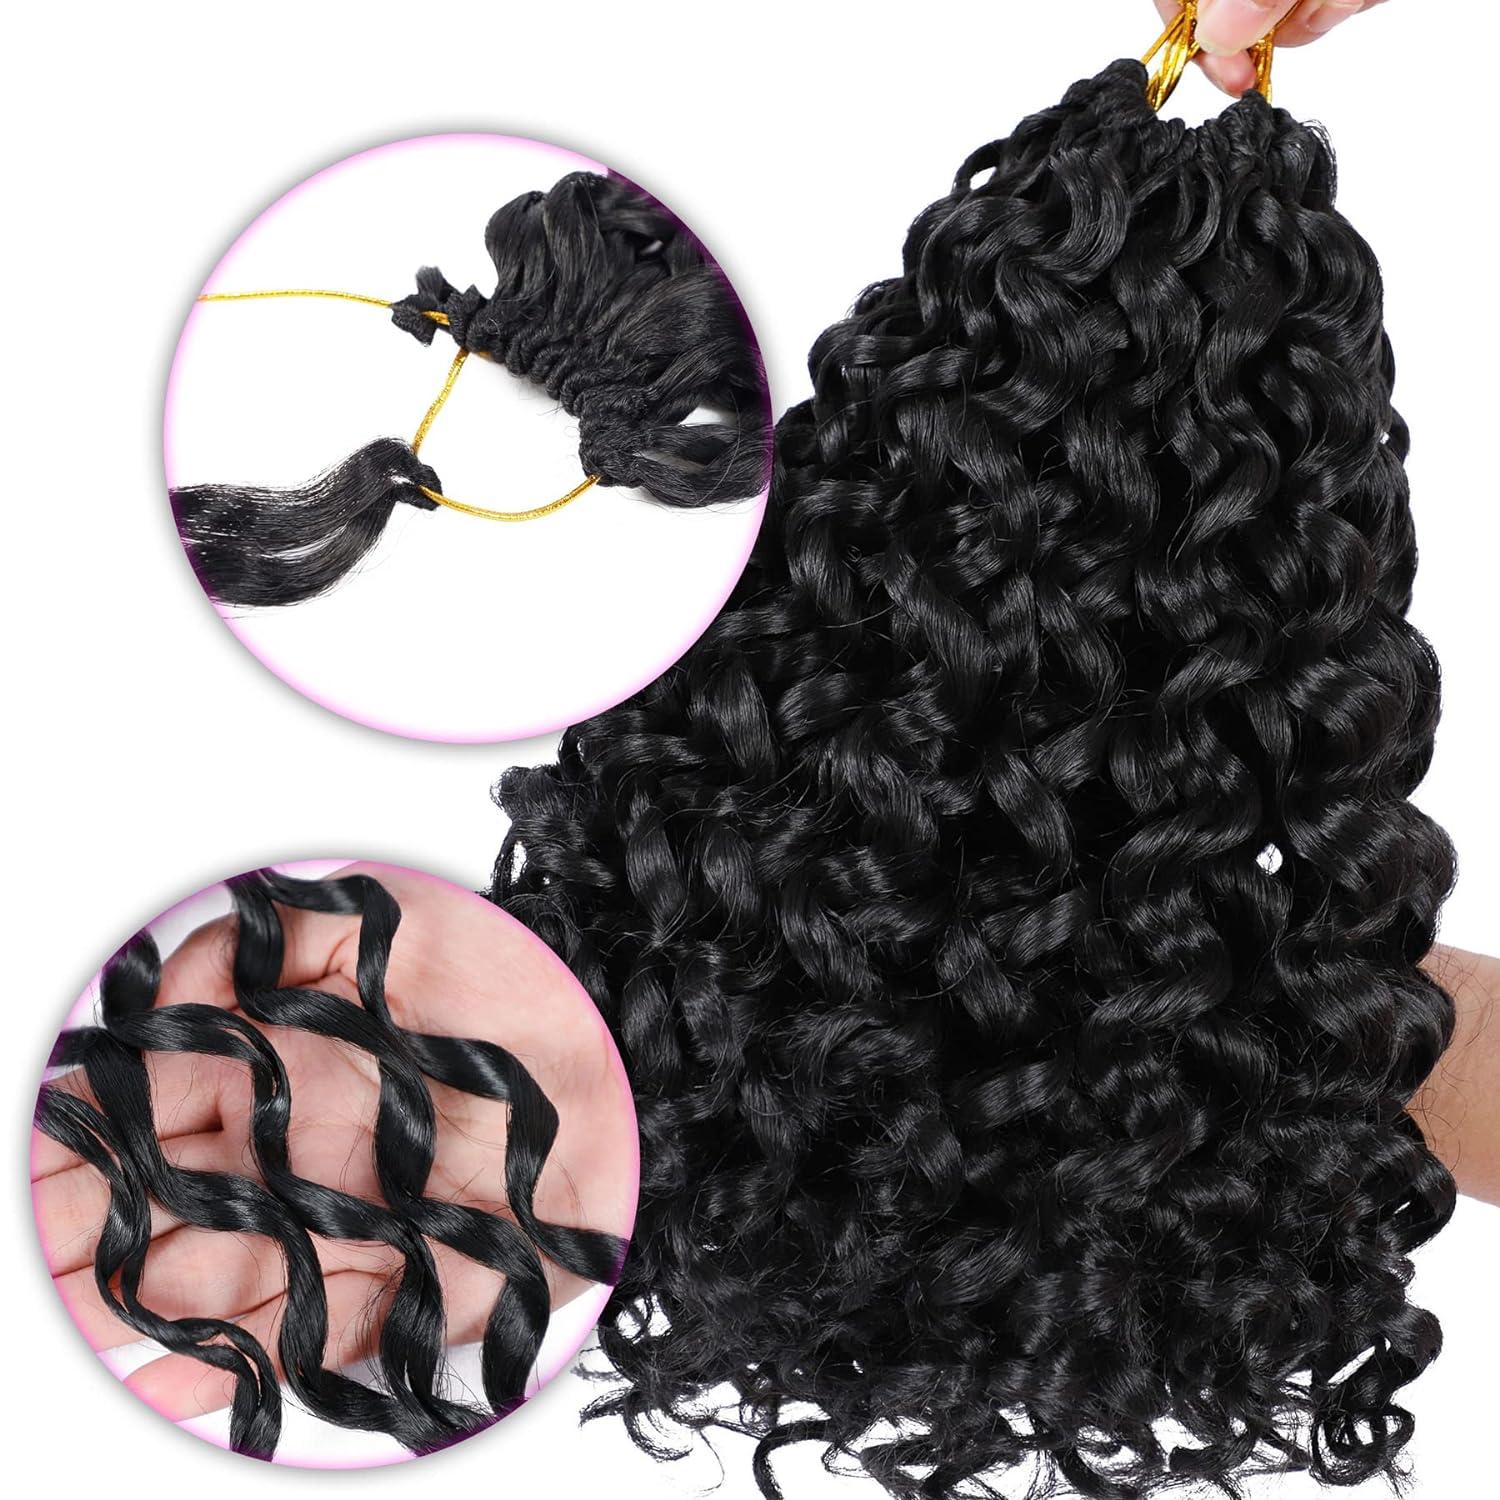  GoGo Curl Crochet Hair 18 Inch 7 Packs Curly